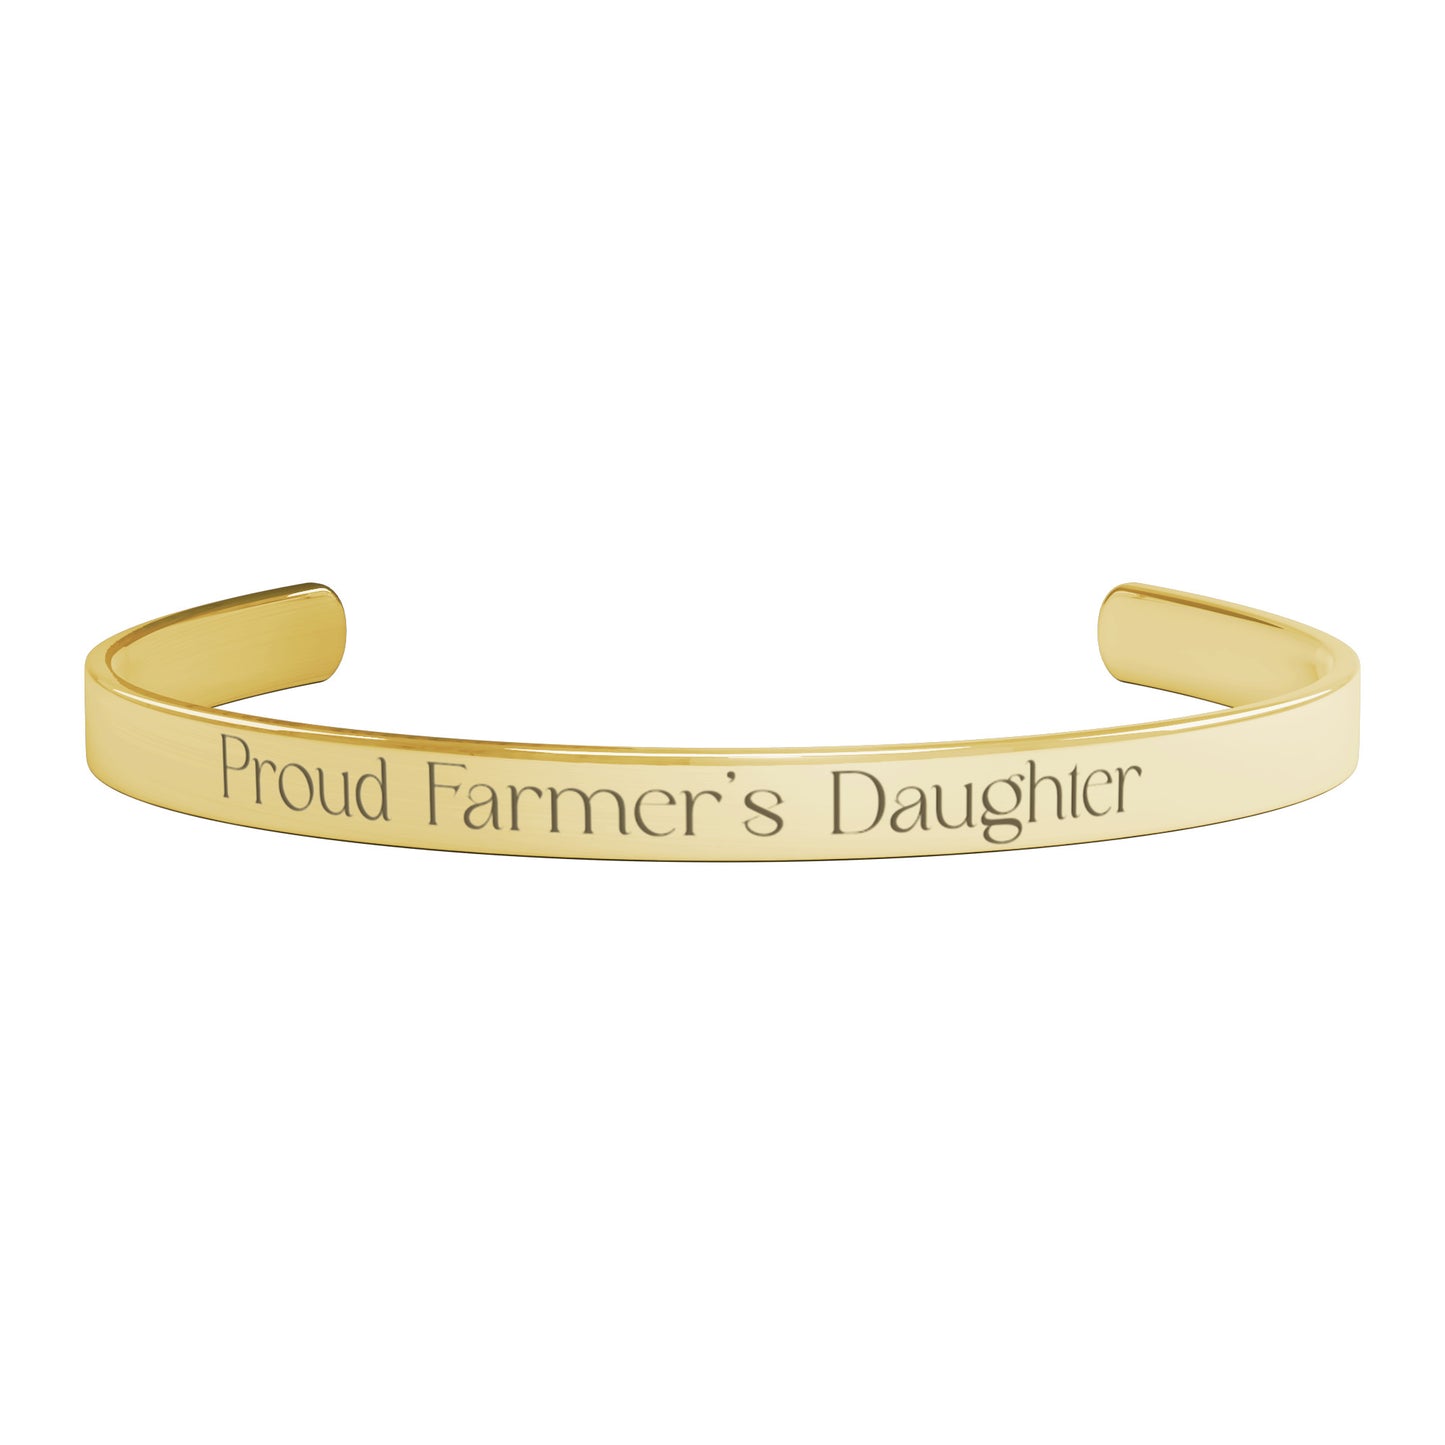 Proud Farmer's Daughter Cuff Bracelet - FREE SHIPPING